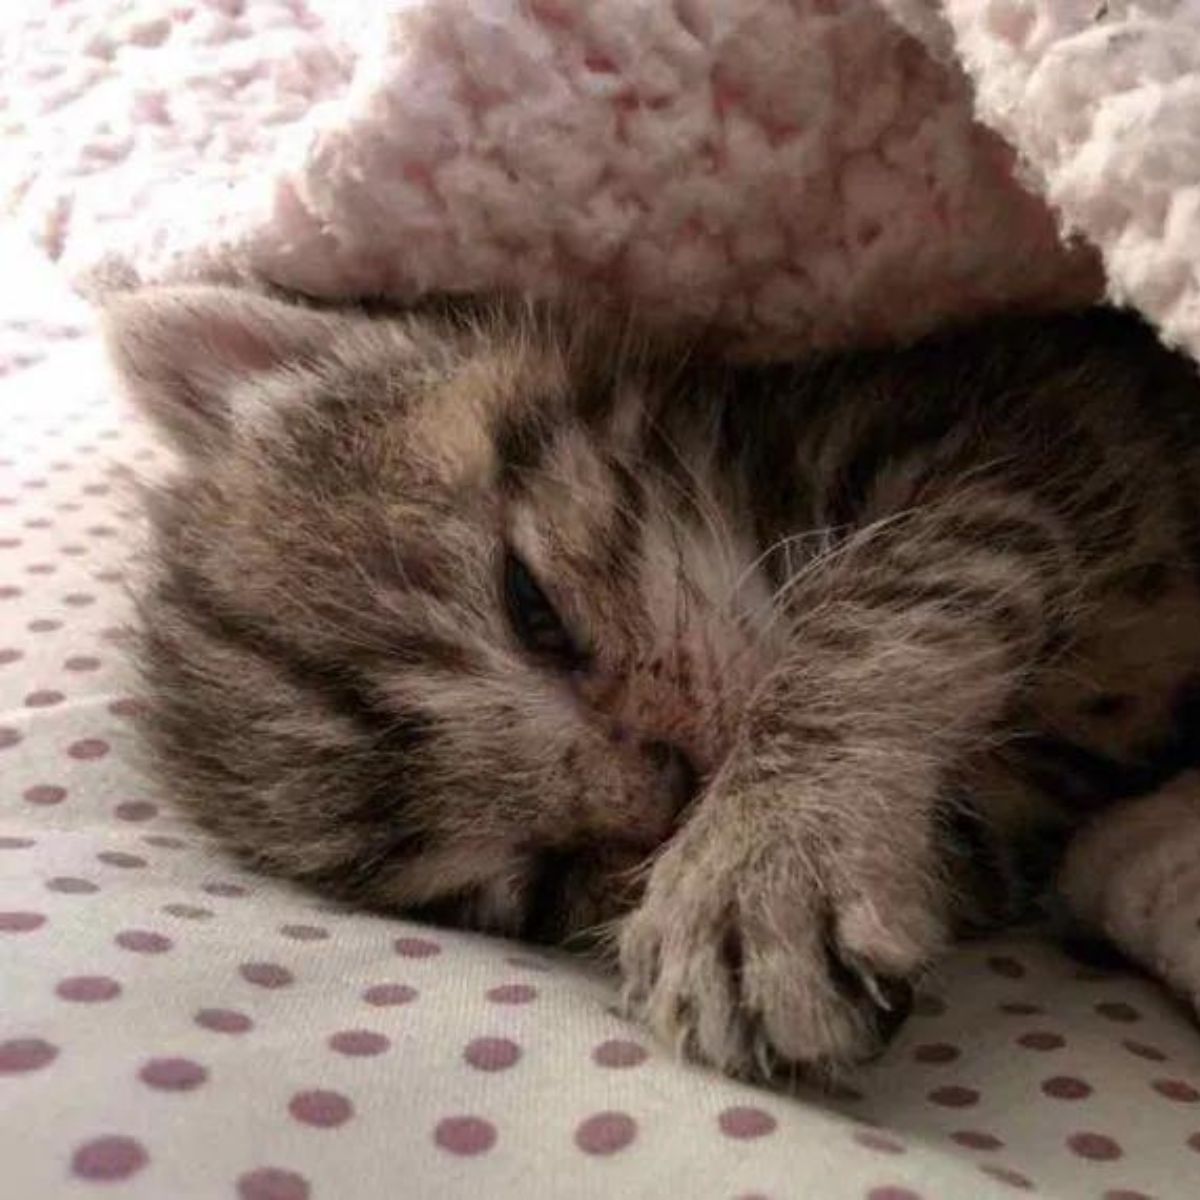 lifeless newborn kitten